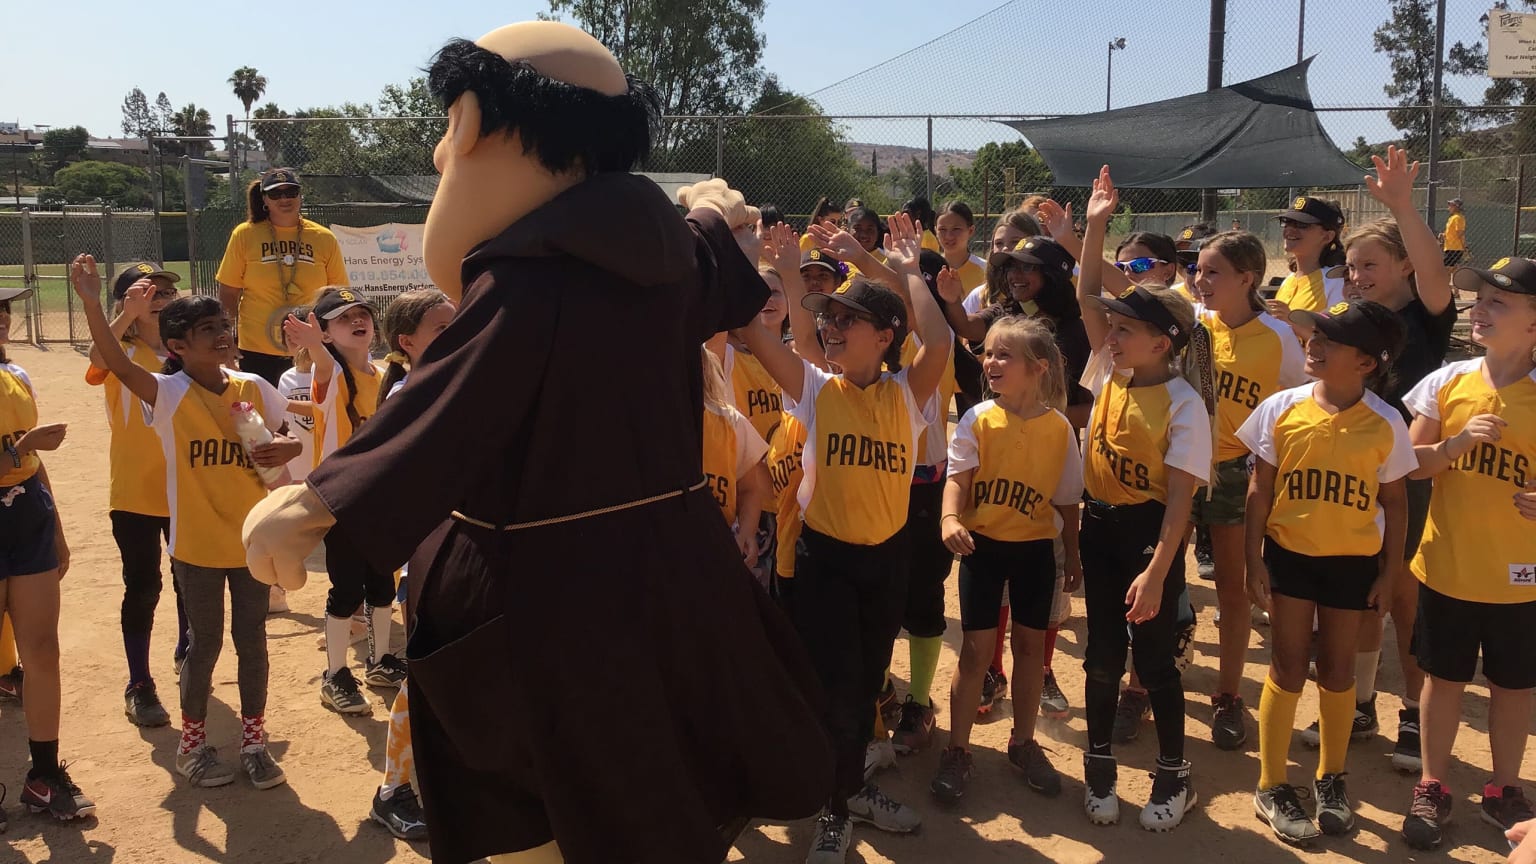 Padres Community, Play, Baseball & Softball Camps